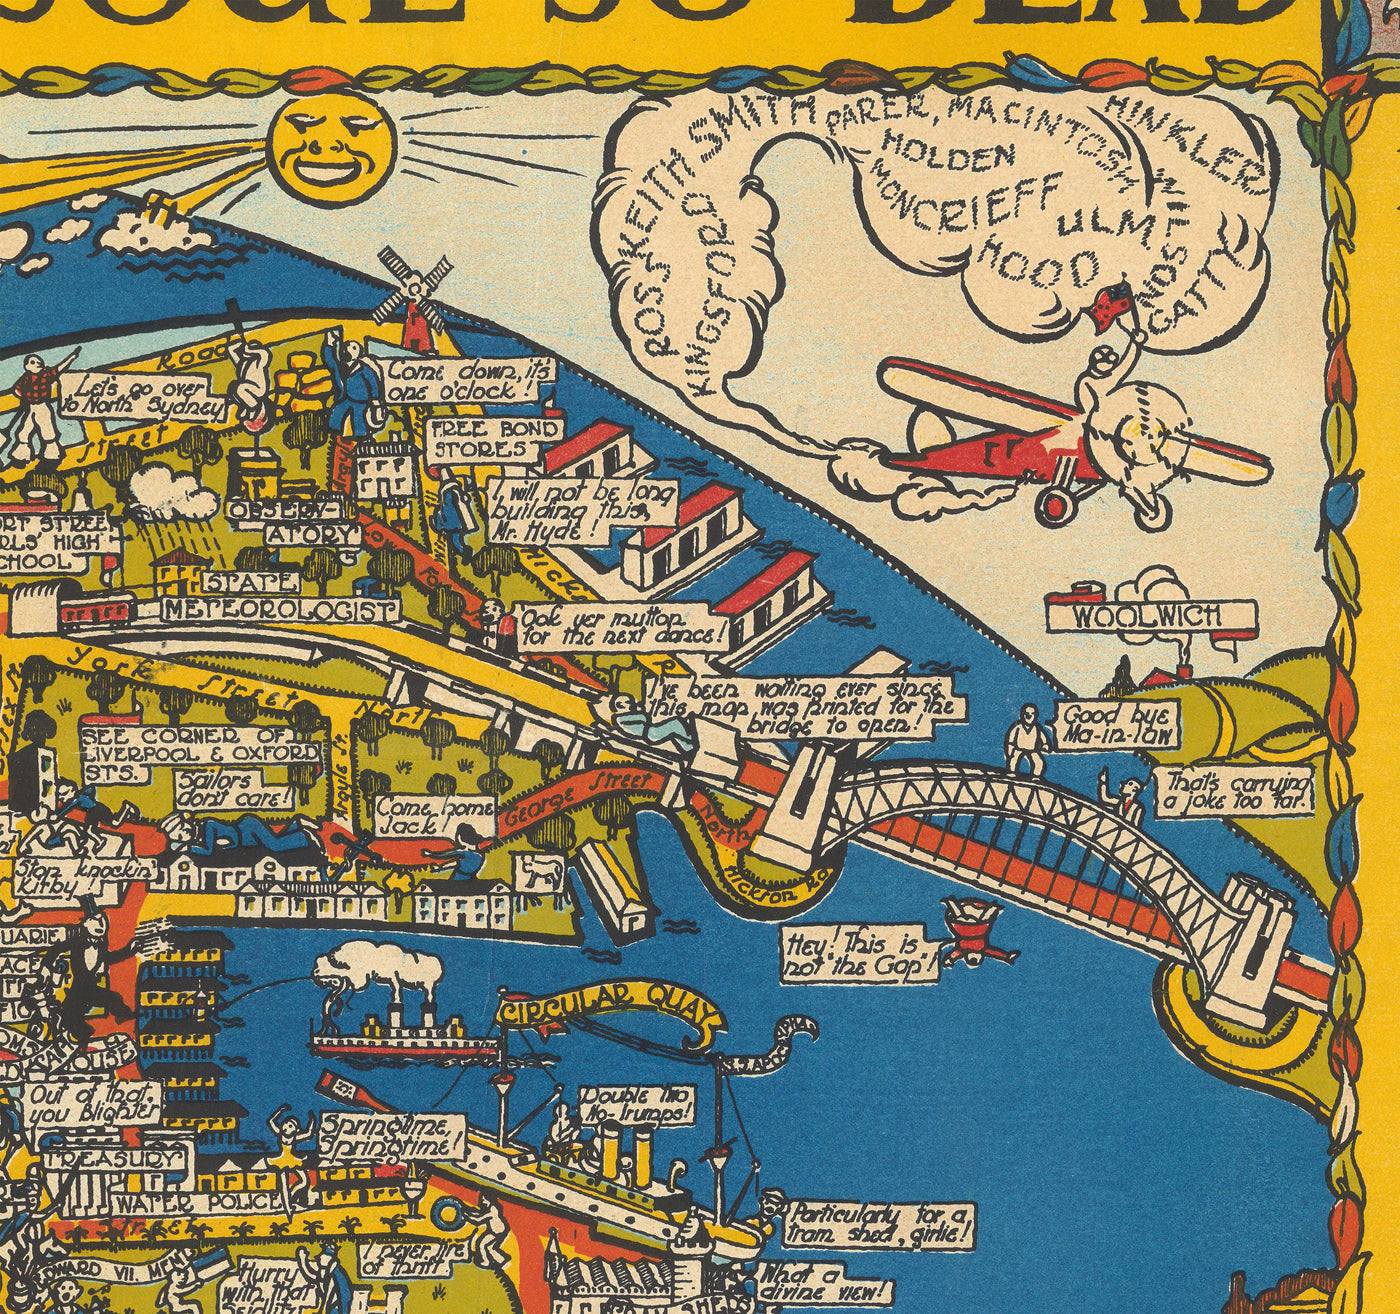 Viejo mapa pictórico de Sydney, 1932 de Russell Lloyd - Harbour Bridge, Bays, Central Station, Botanic Gardens & Sirmaids!